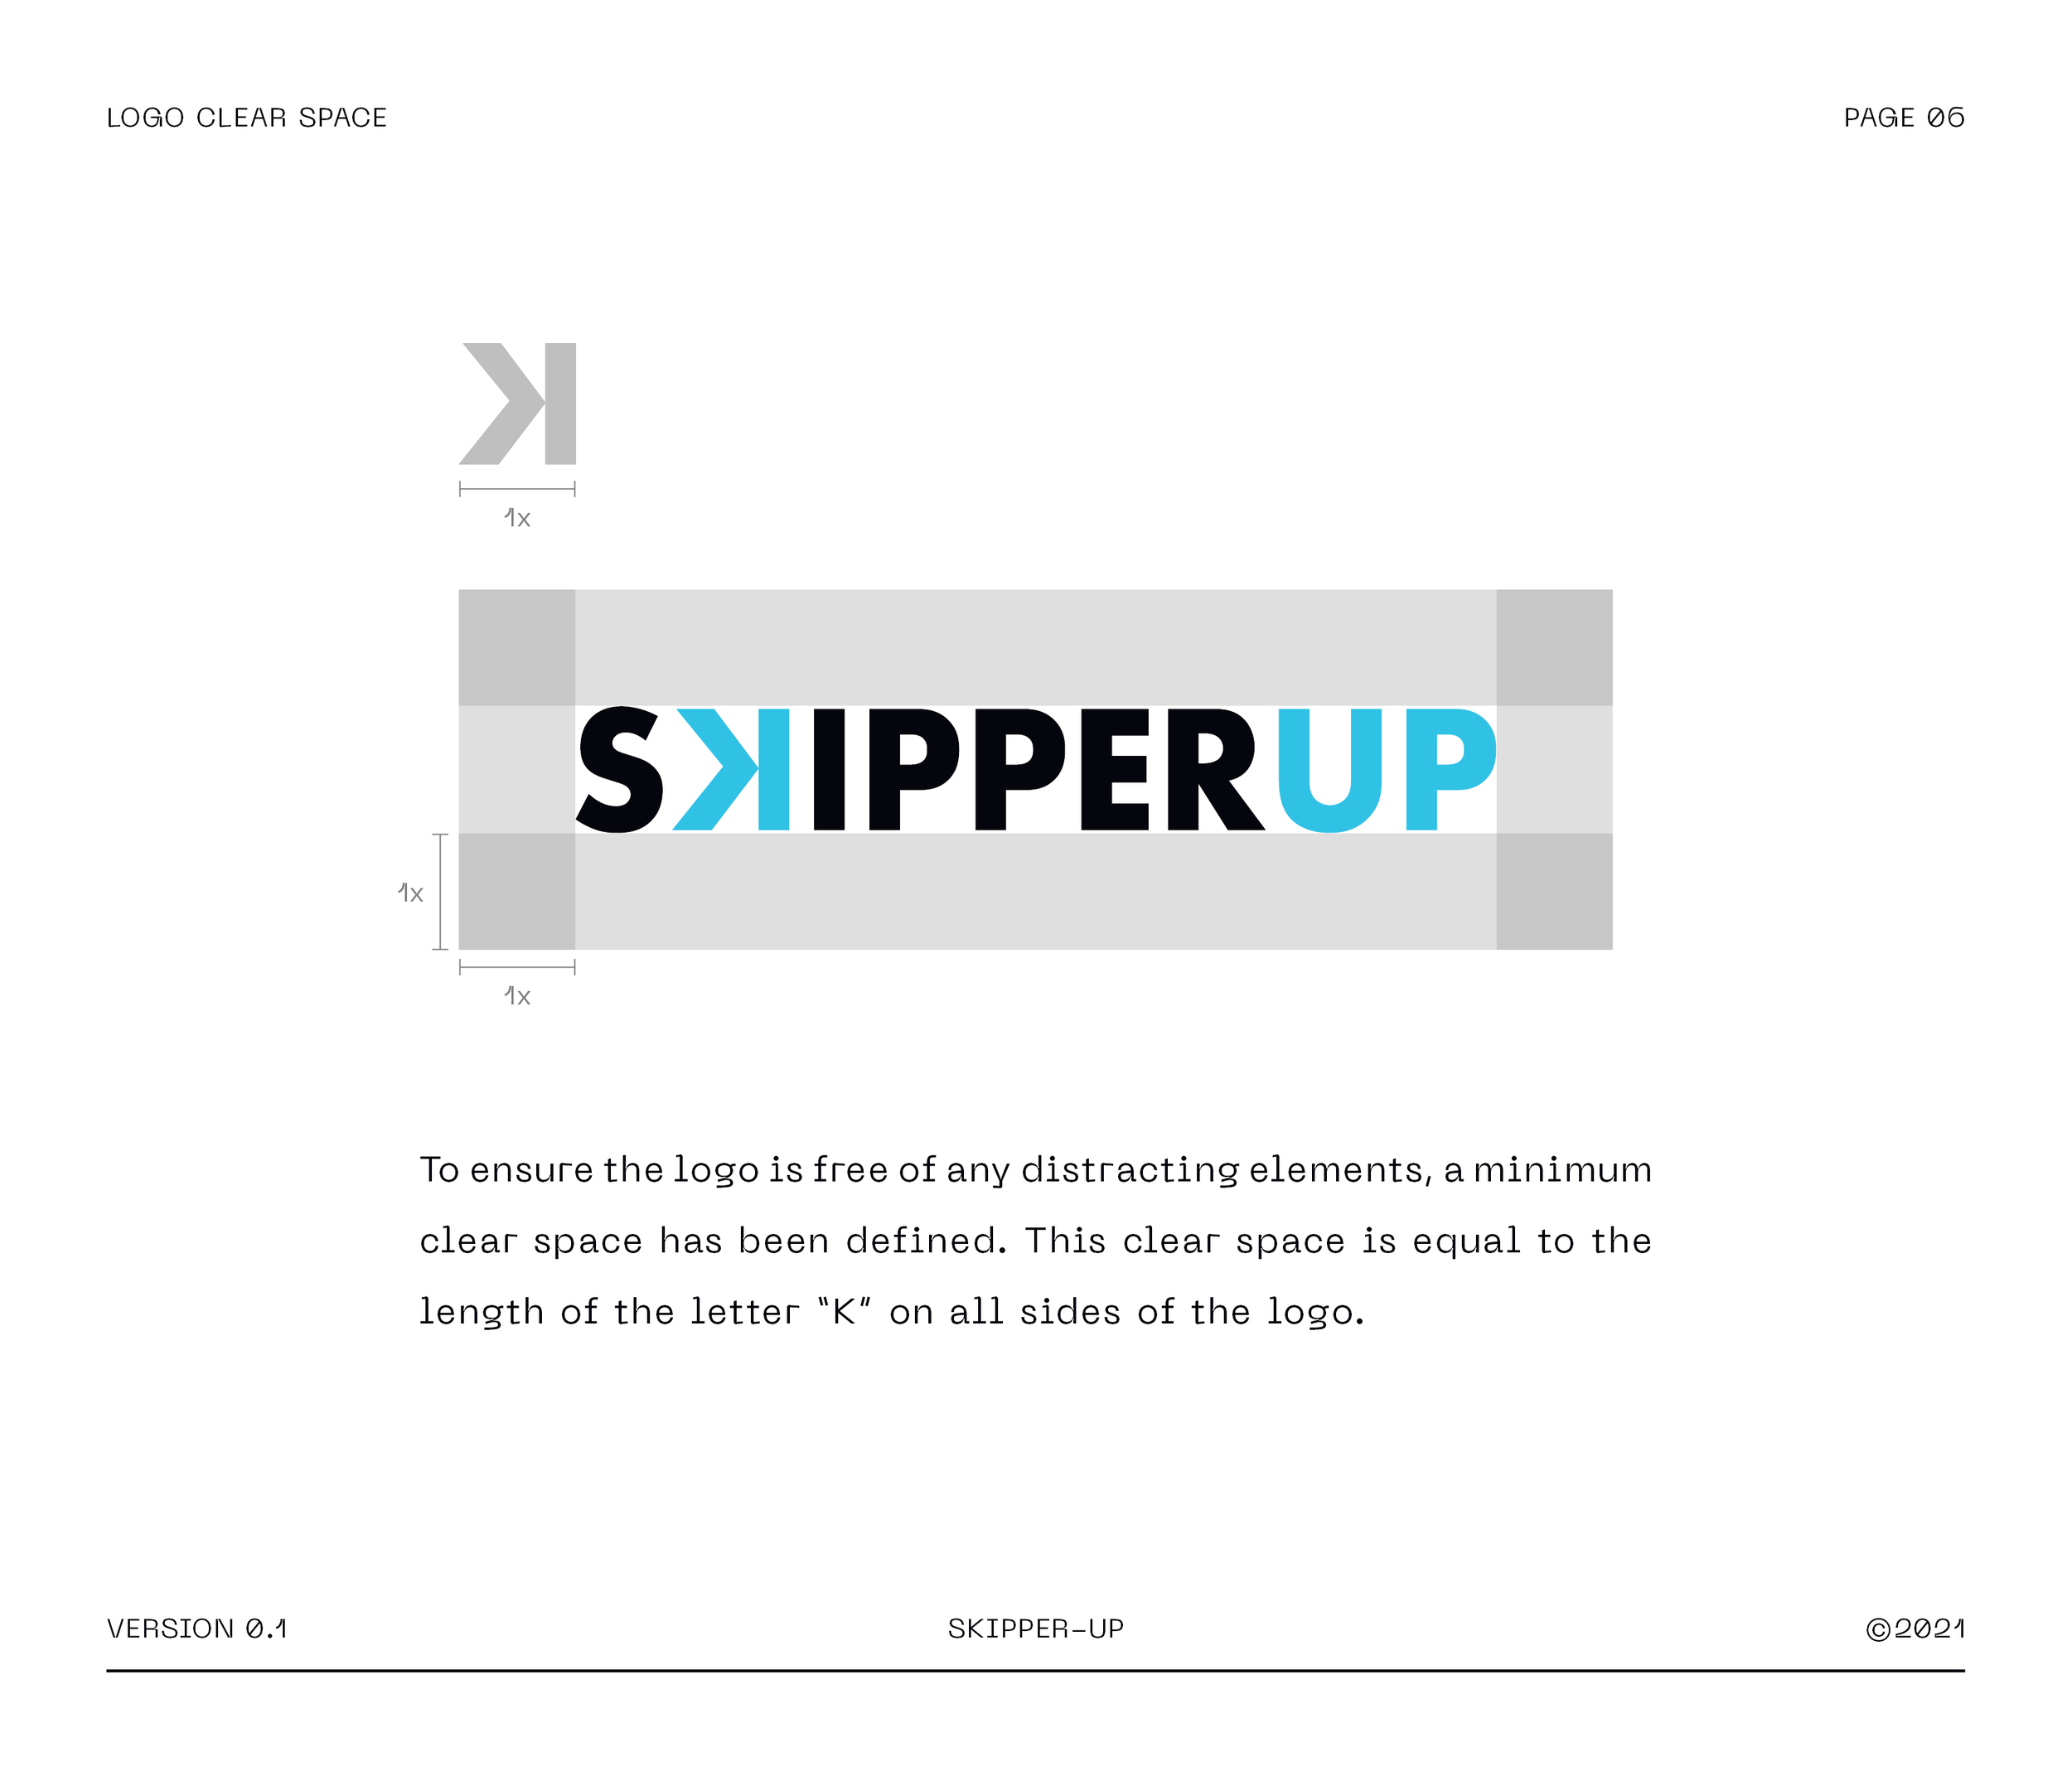 Skipper-Up Styleguide7.png